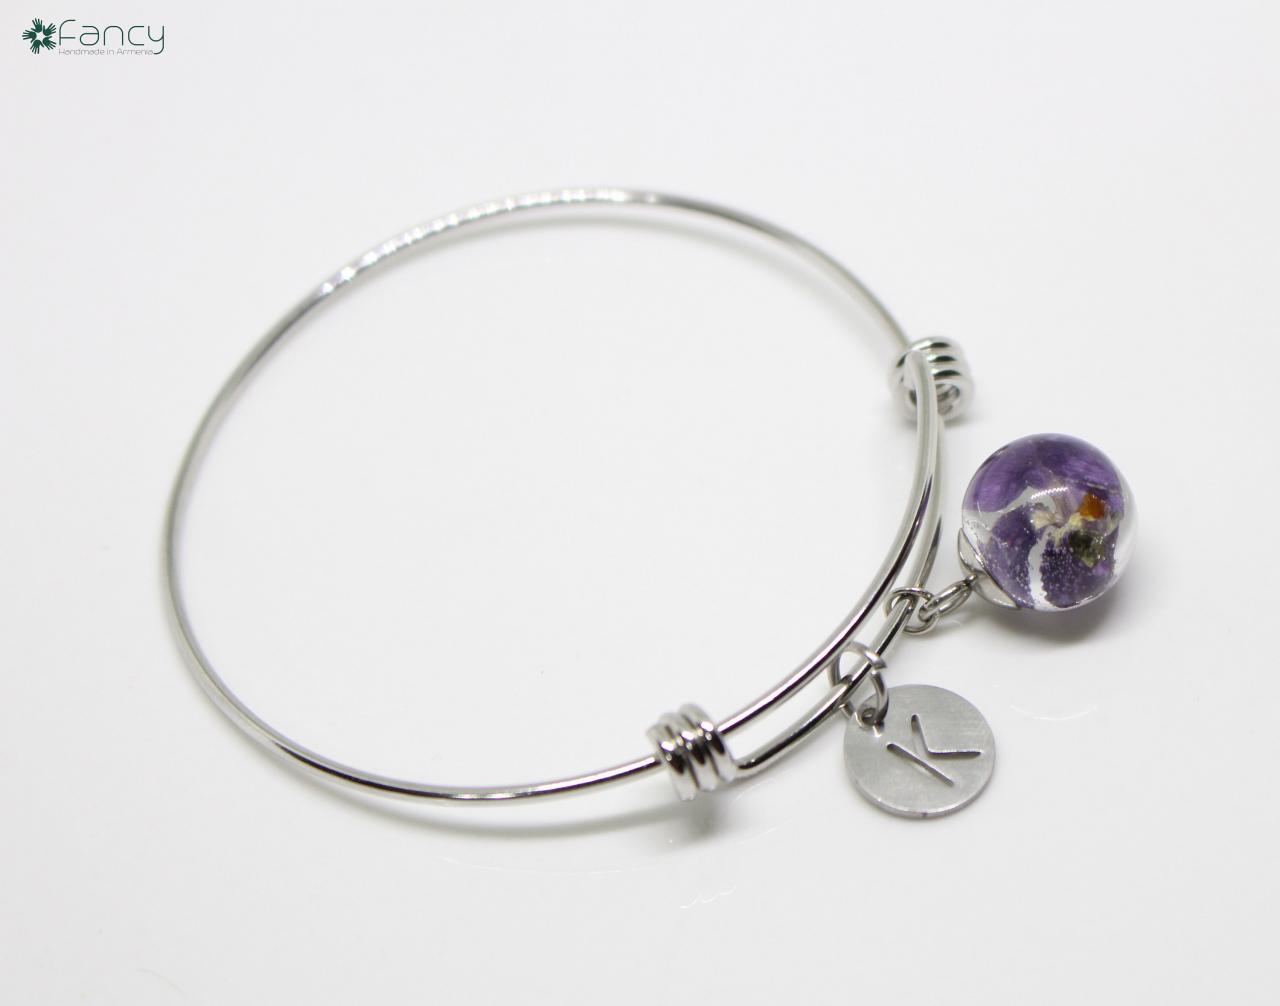 Violet Flower Bracelet, Violet Jewelry, Dried Violet Flowers, Personalized Bracelet For Women, Initial Bangle Bracelet, Armenian Gifts